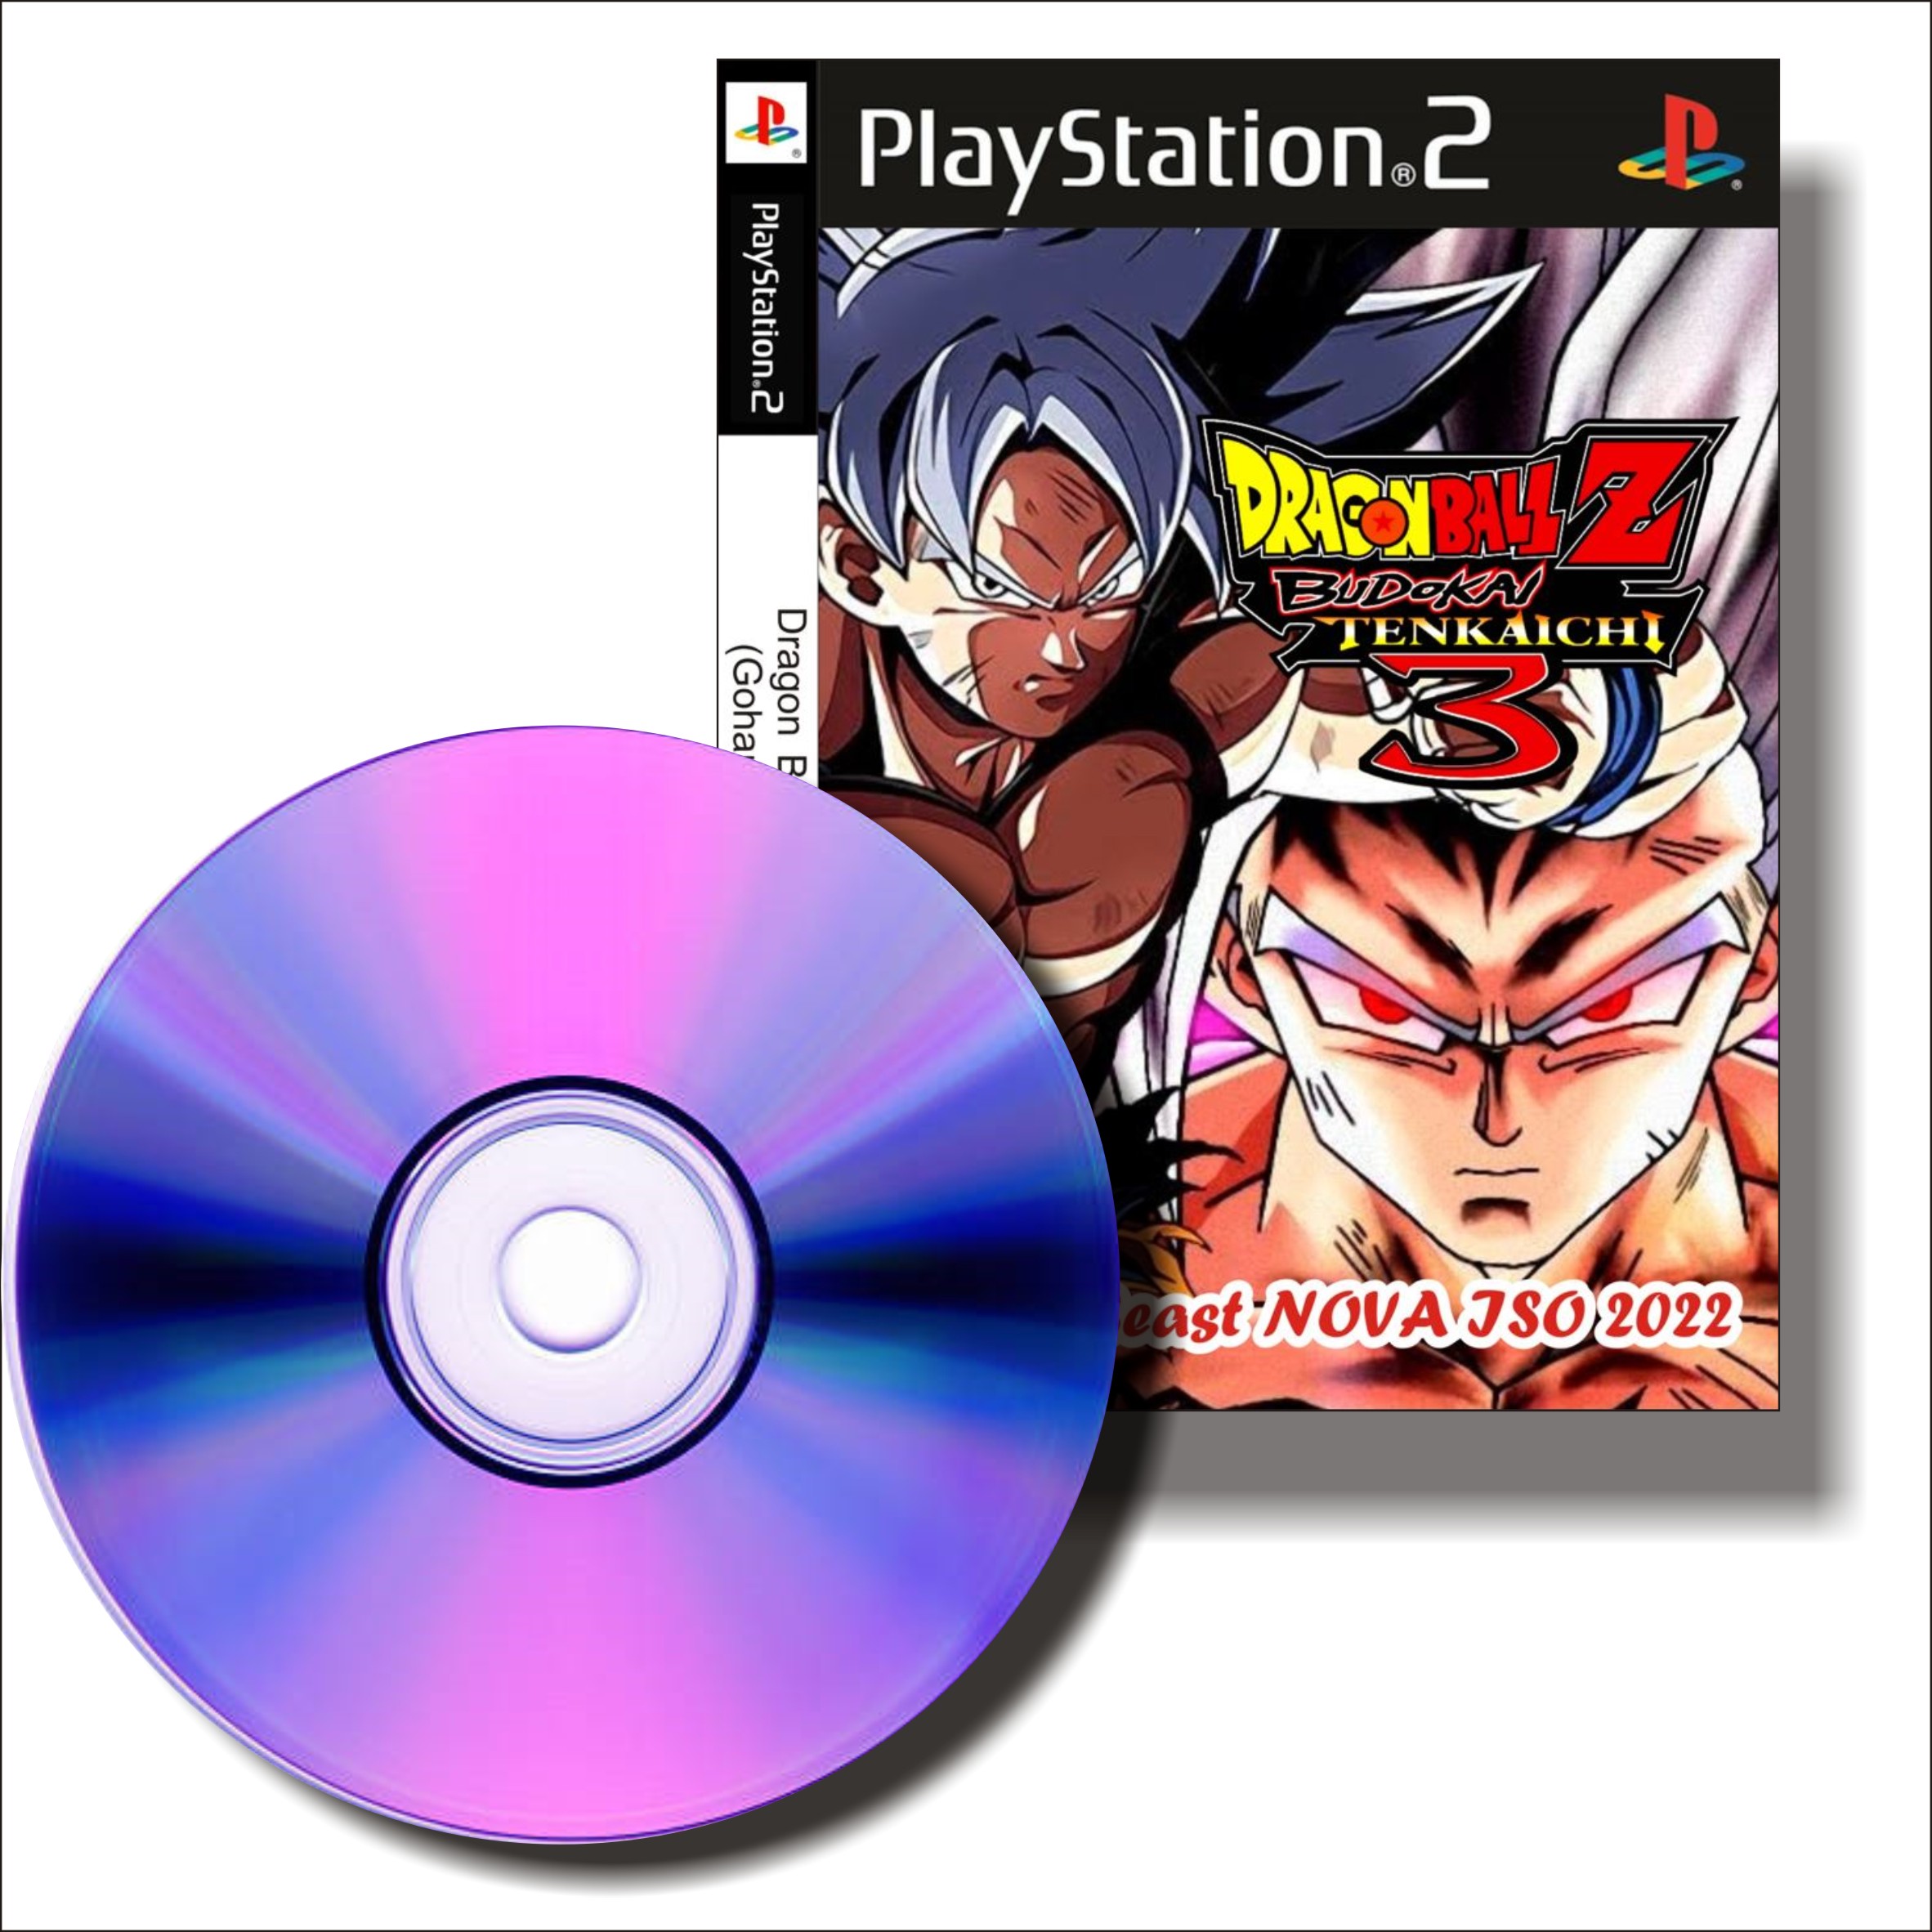 PS2 Game - Dragon Ball Z Budokai Tenkaichi 3 (Gohan Beast NOVA ISO 2022)